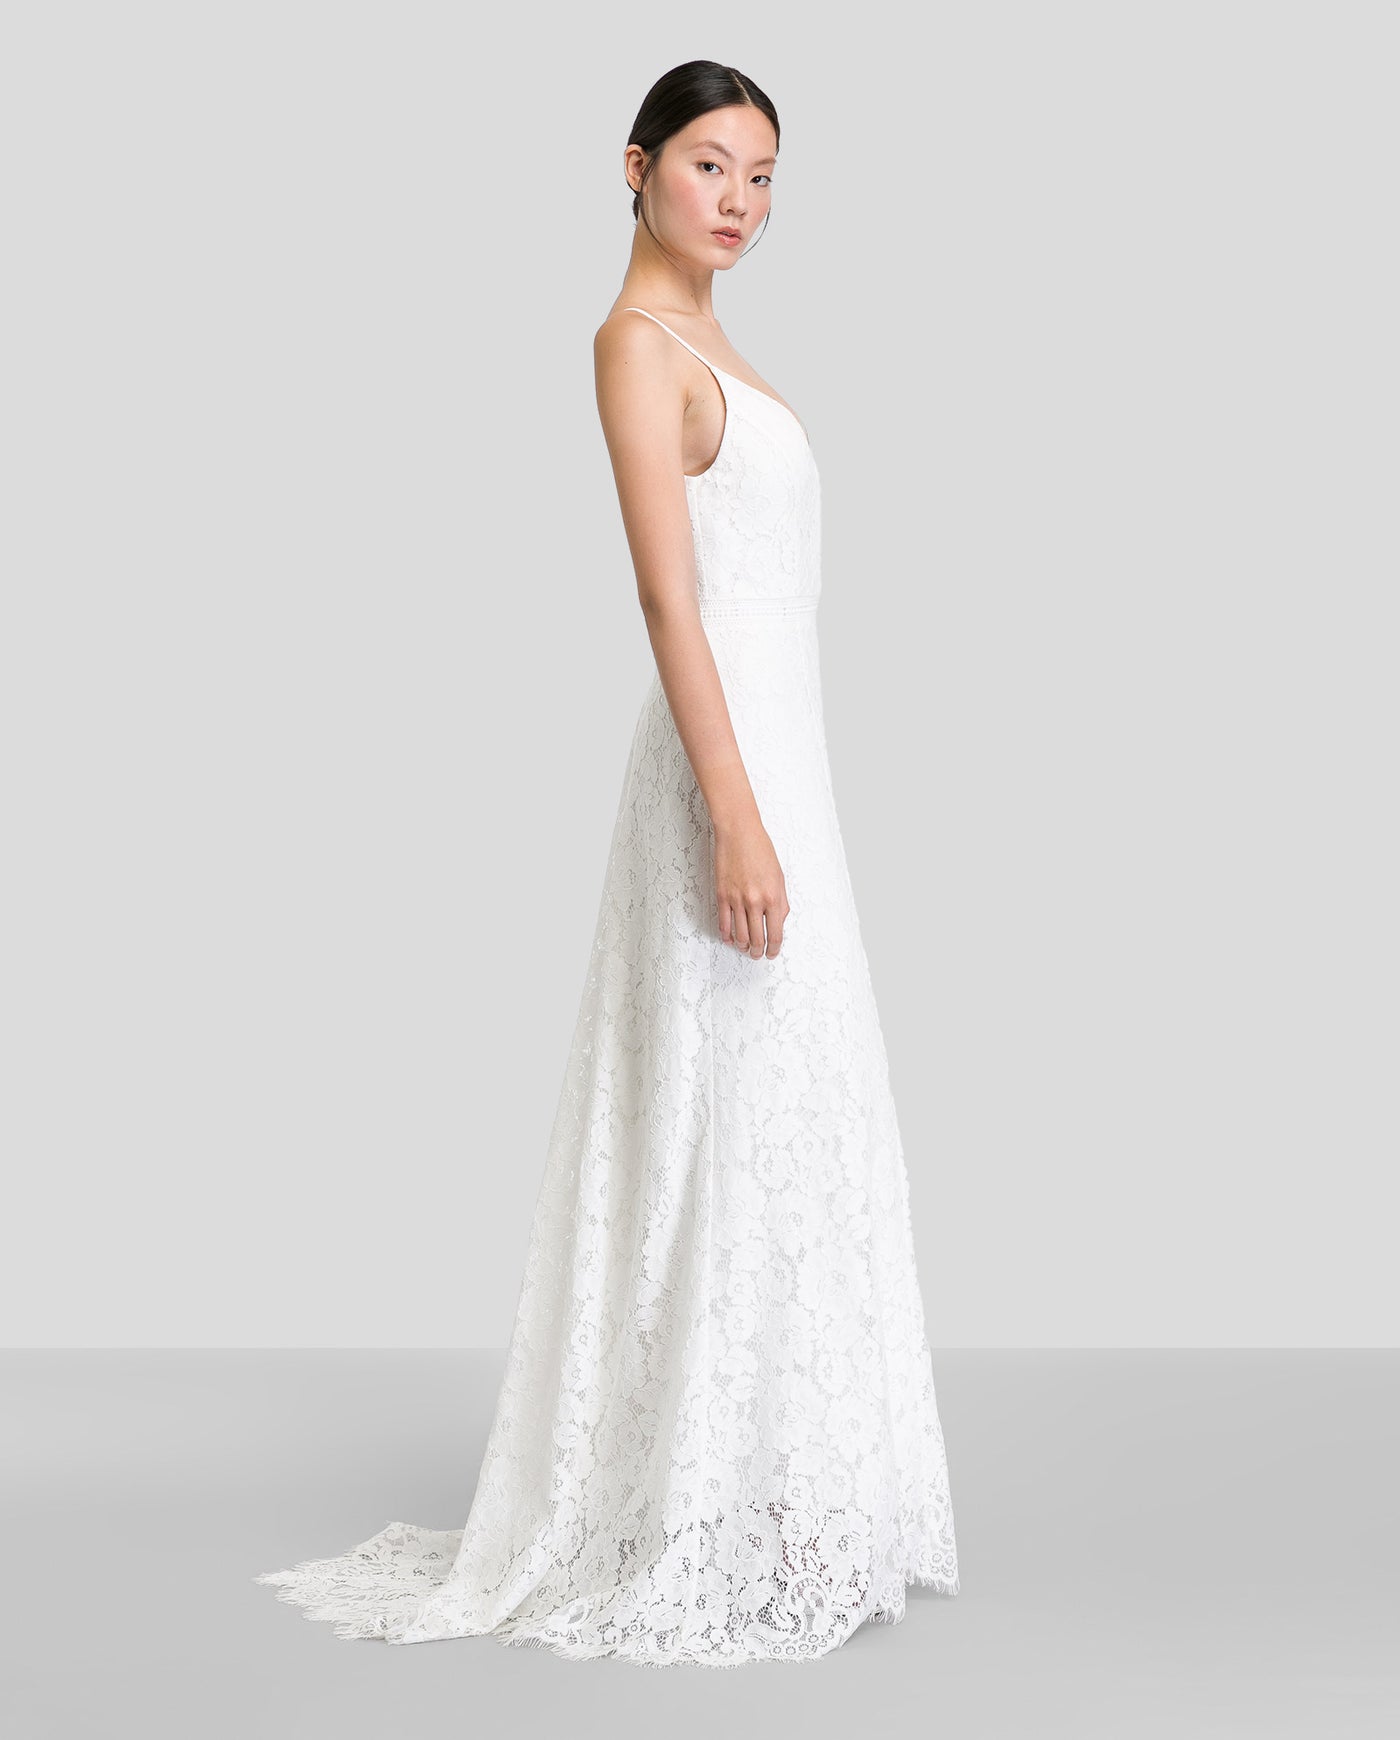 IVY OAK - MARY Bridal Dress - IO1123S7531-WH010 - White